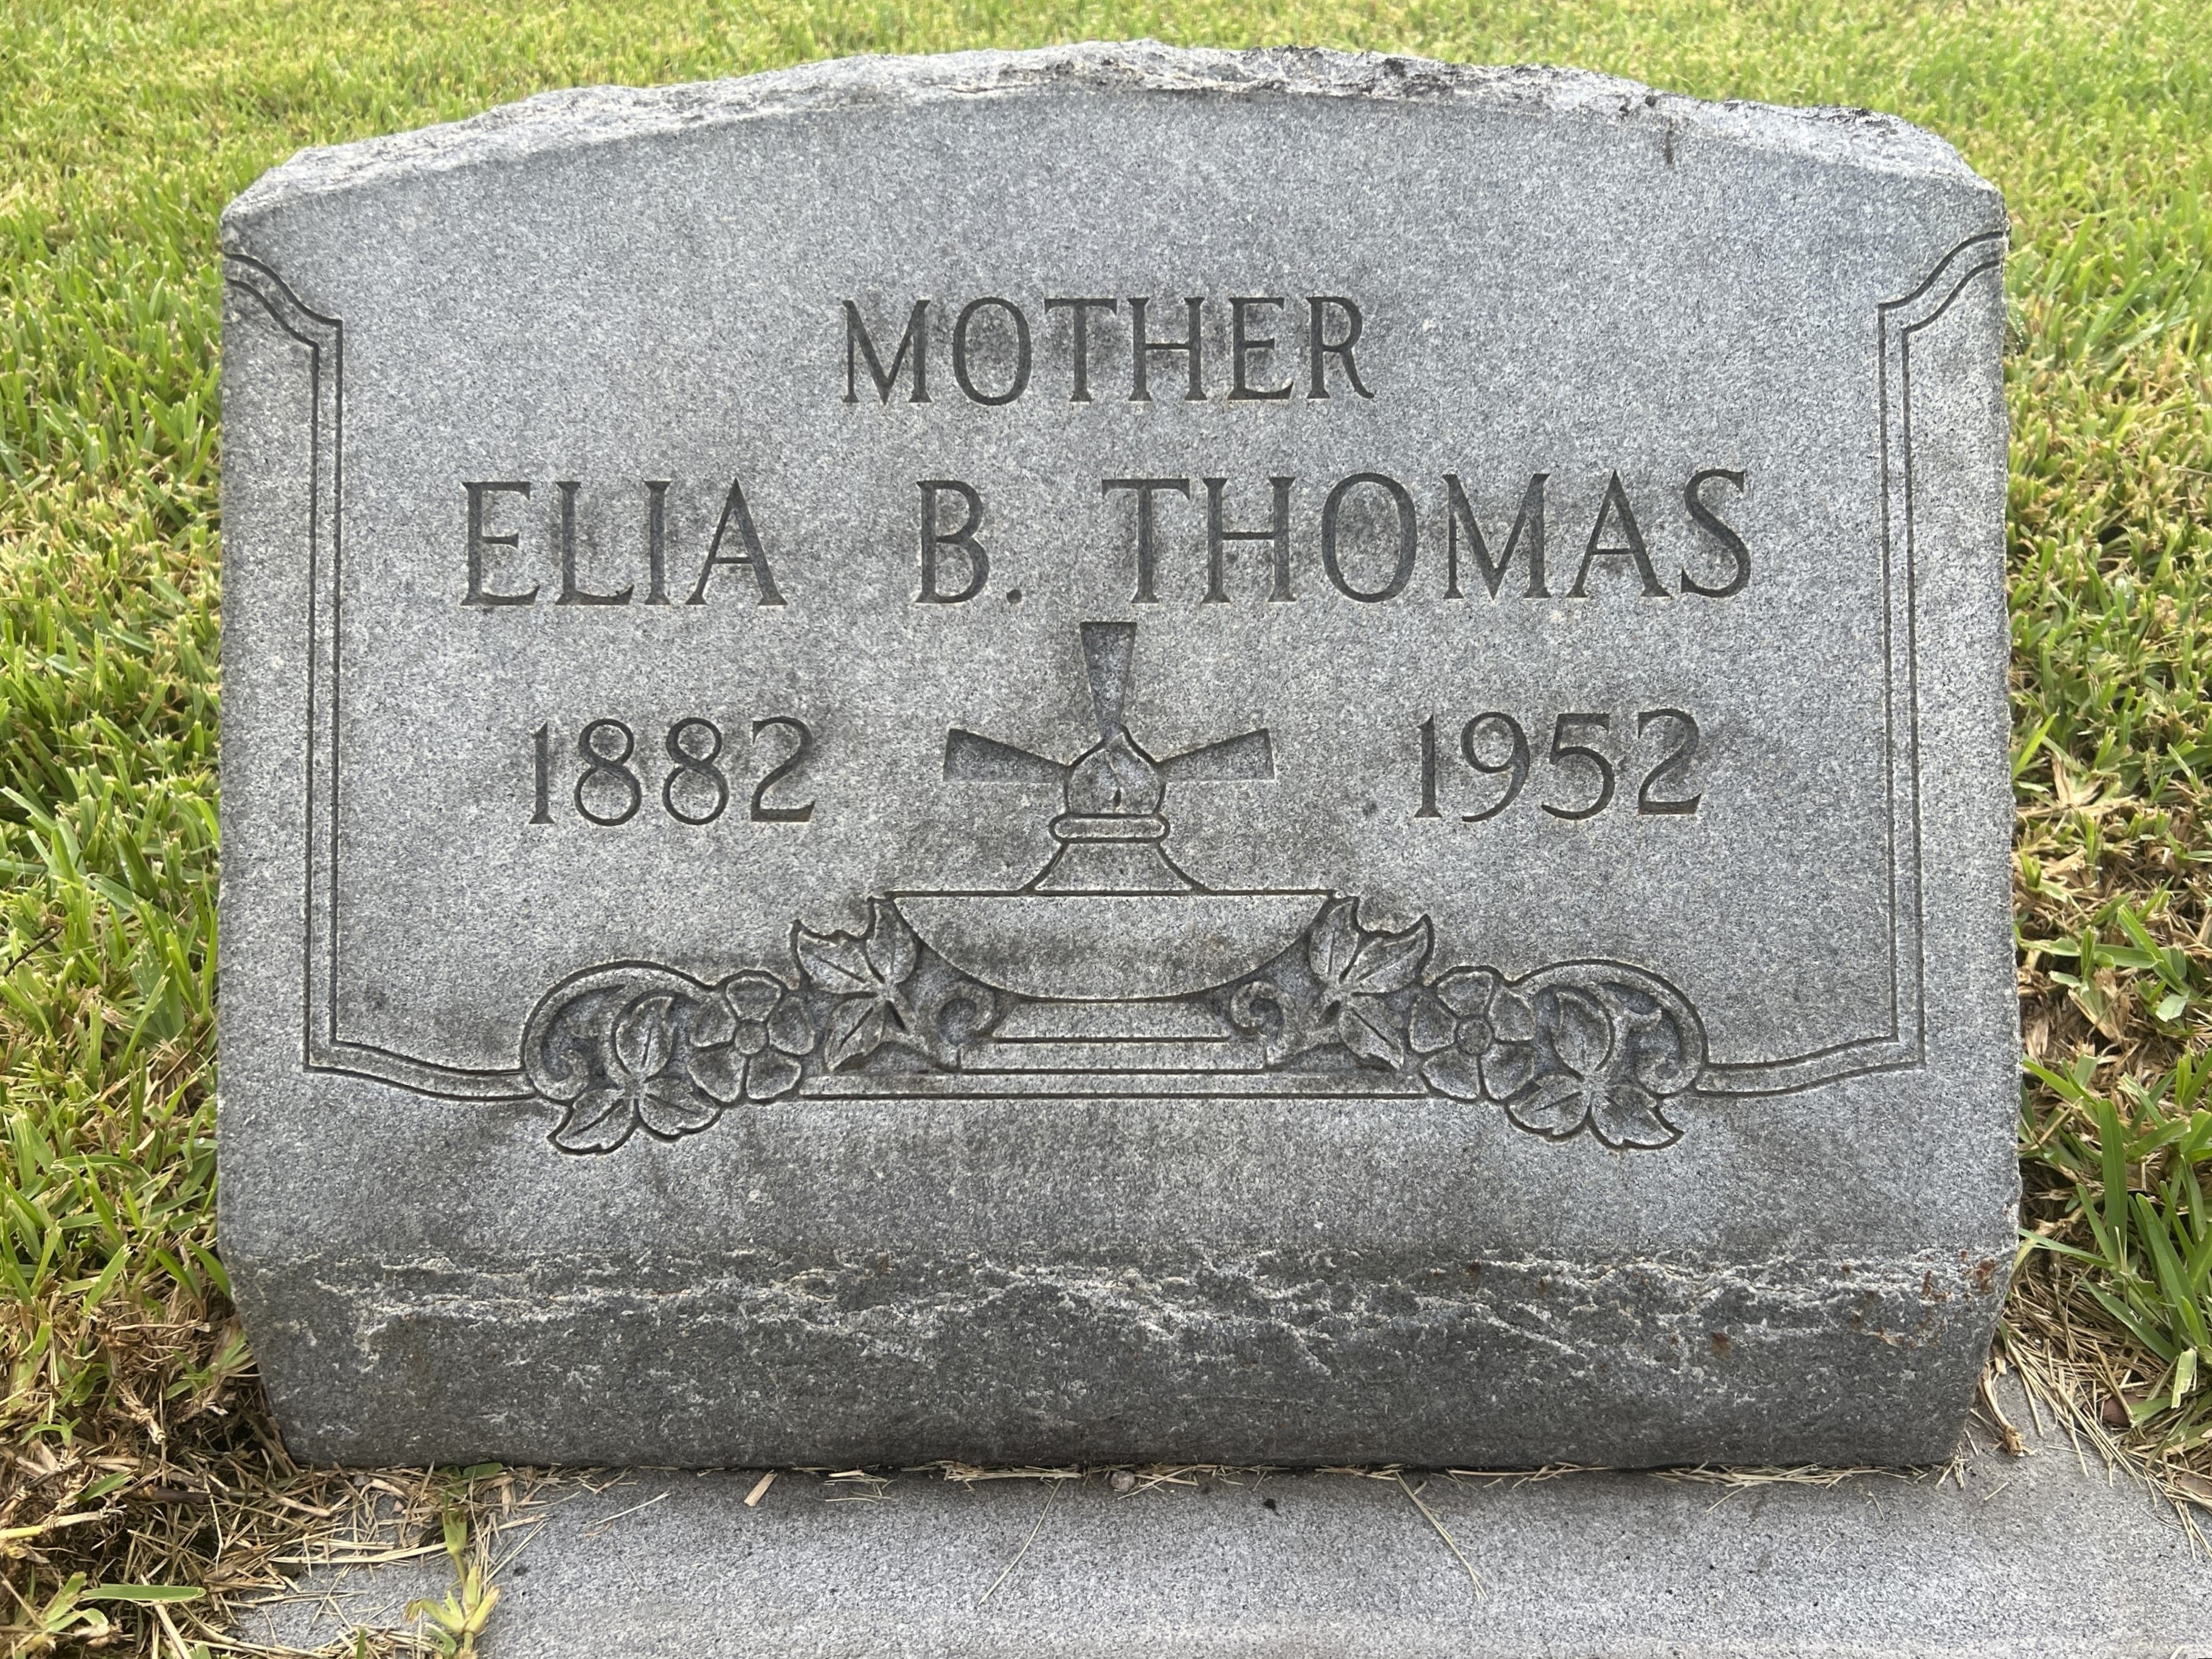 Elia B Thomas